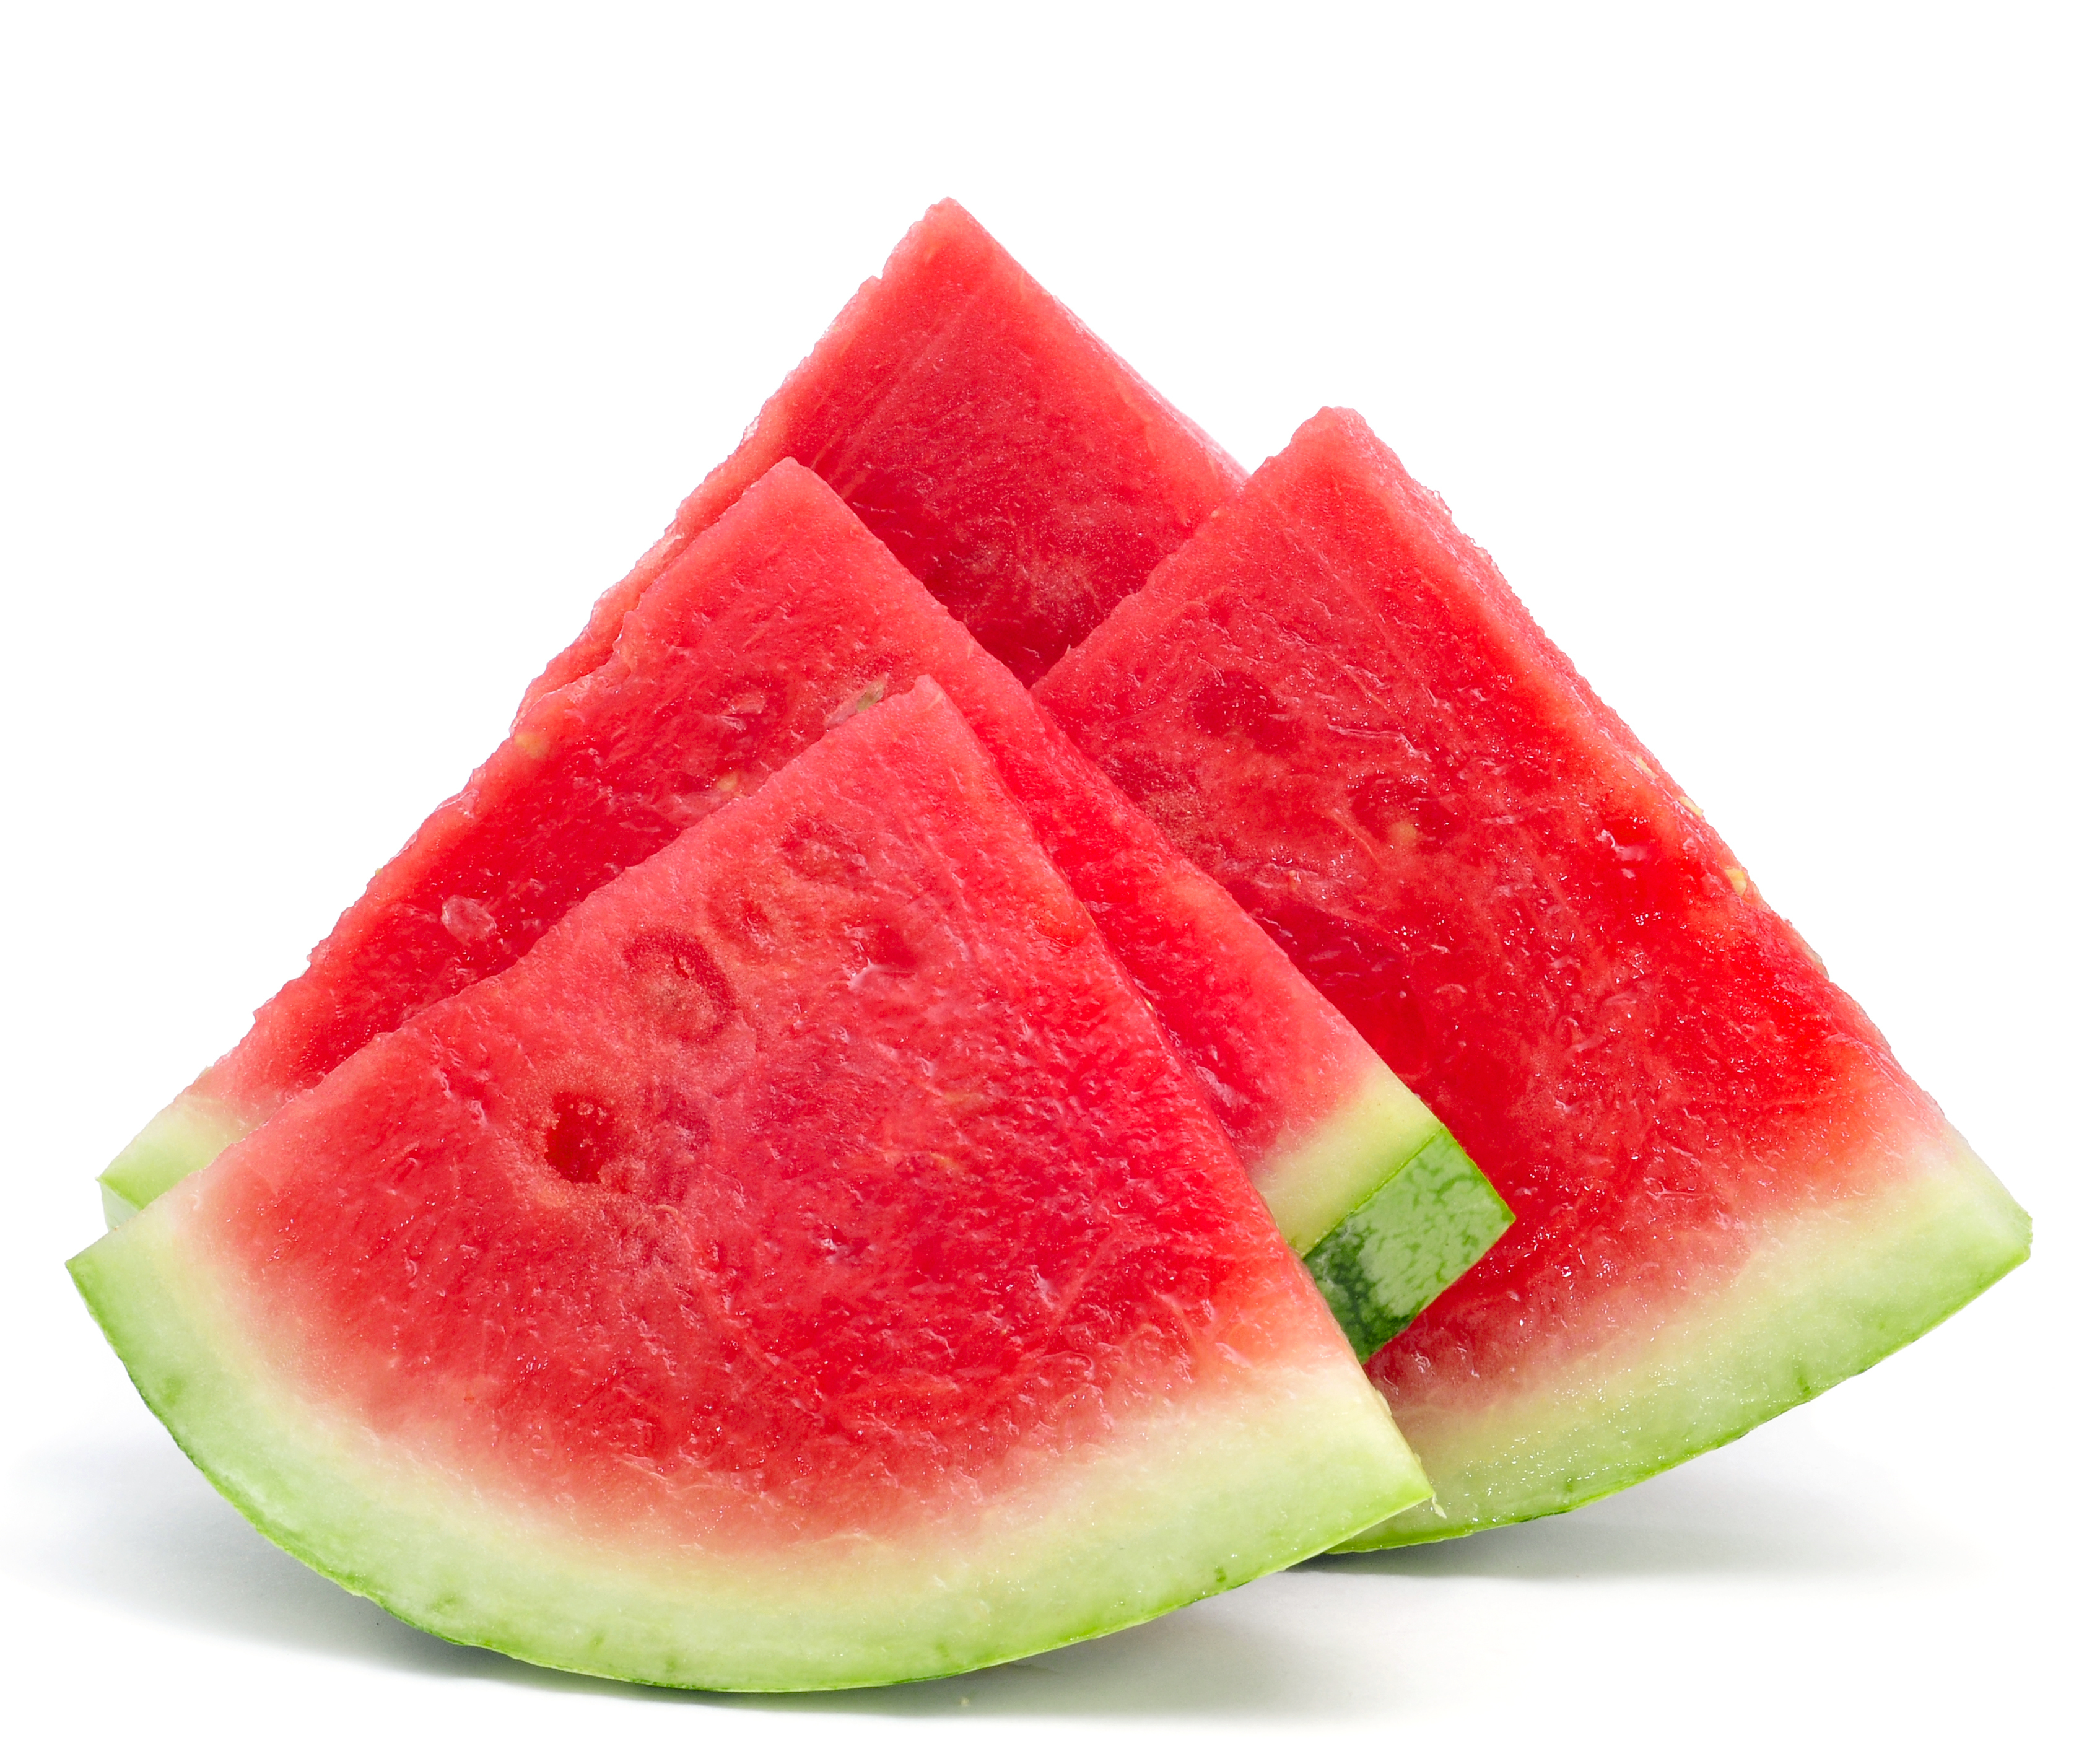 Watermelon #14